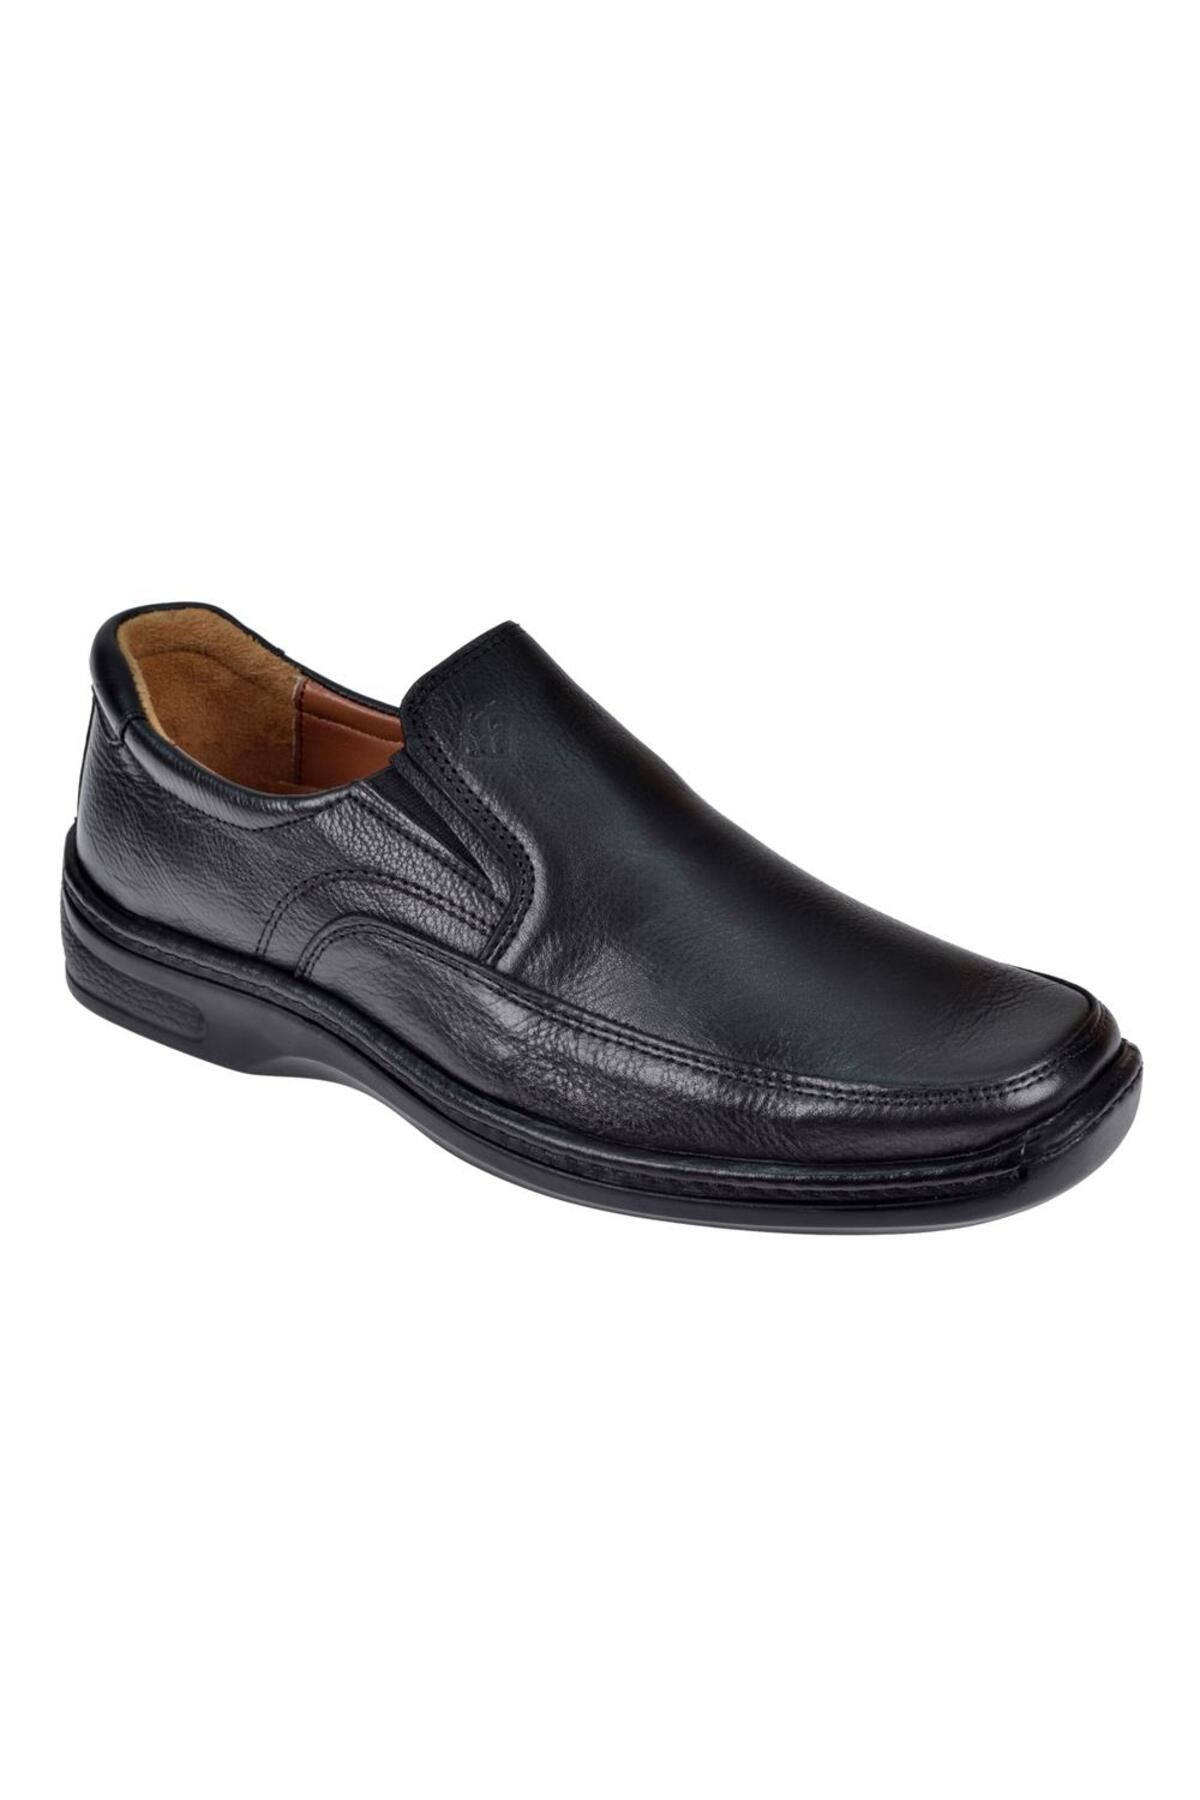 Friendly Hakiki Deri Comfort Erkek Ayakkabı Frd-2046 Siyah